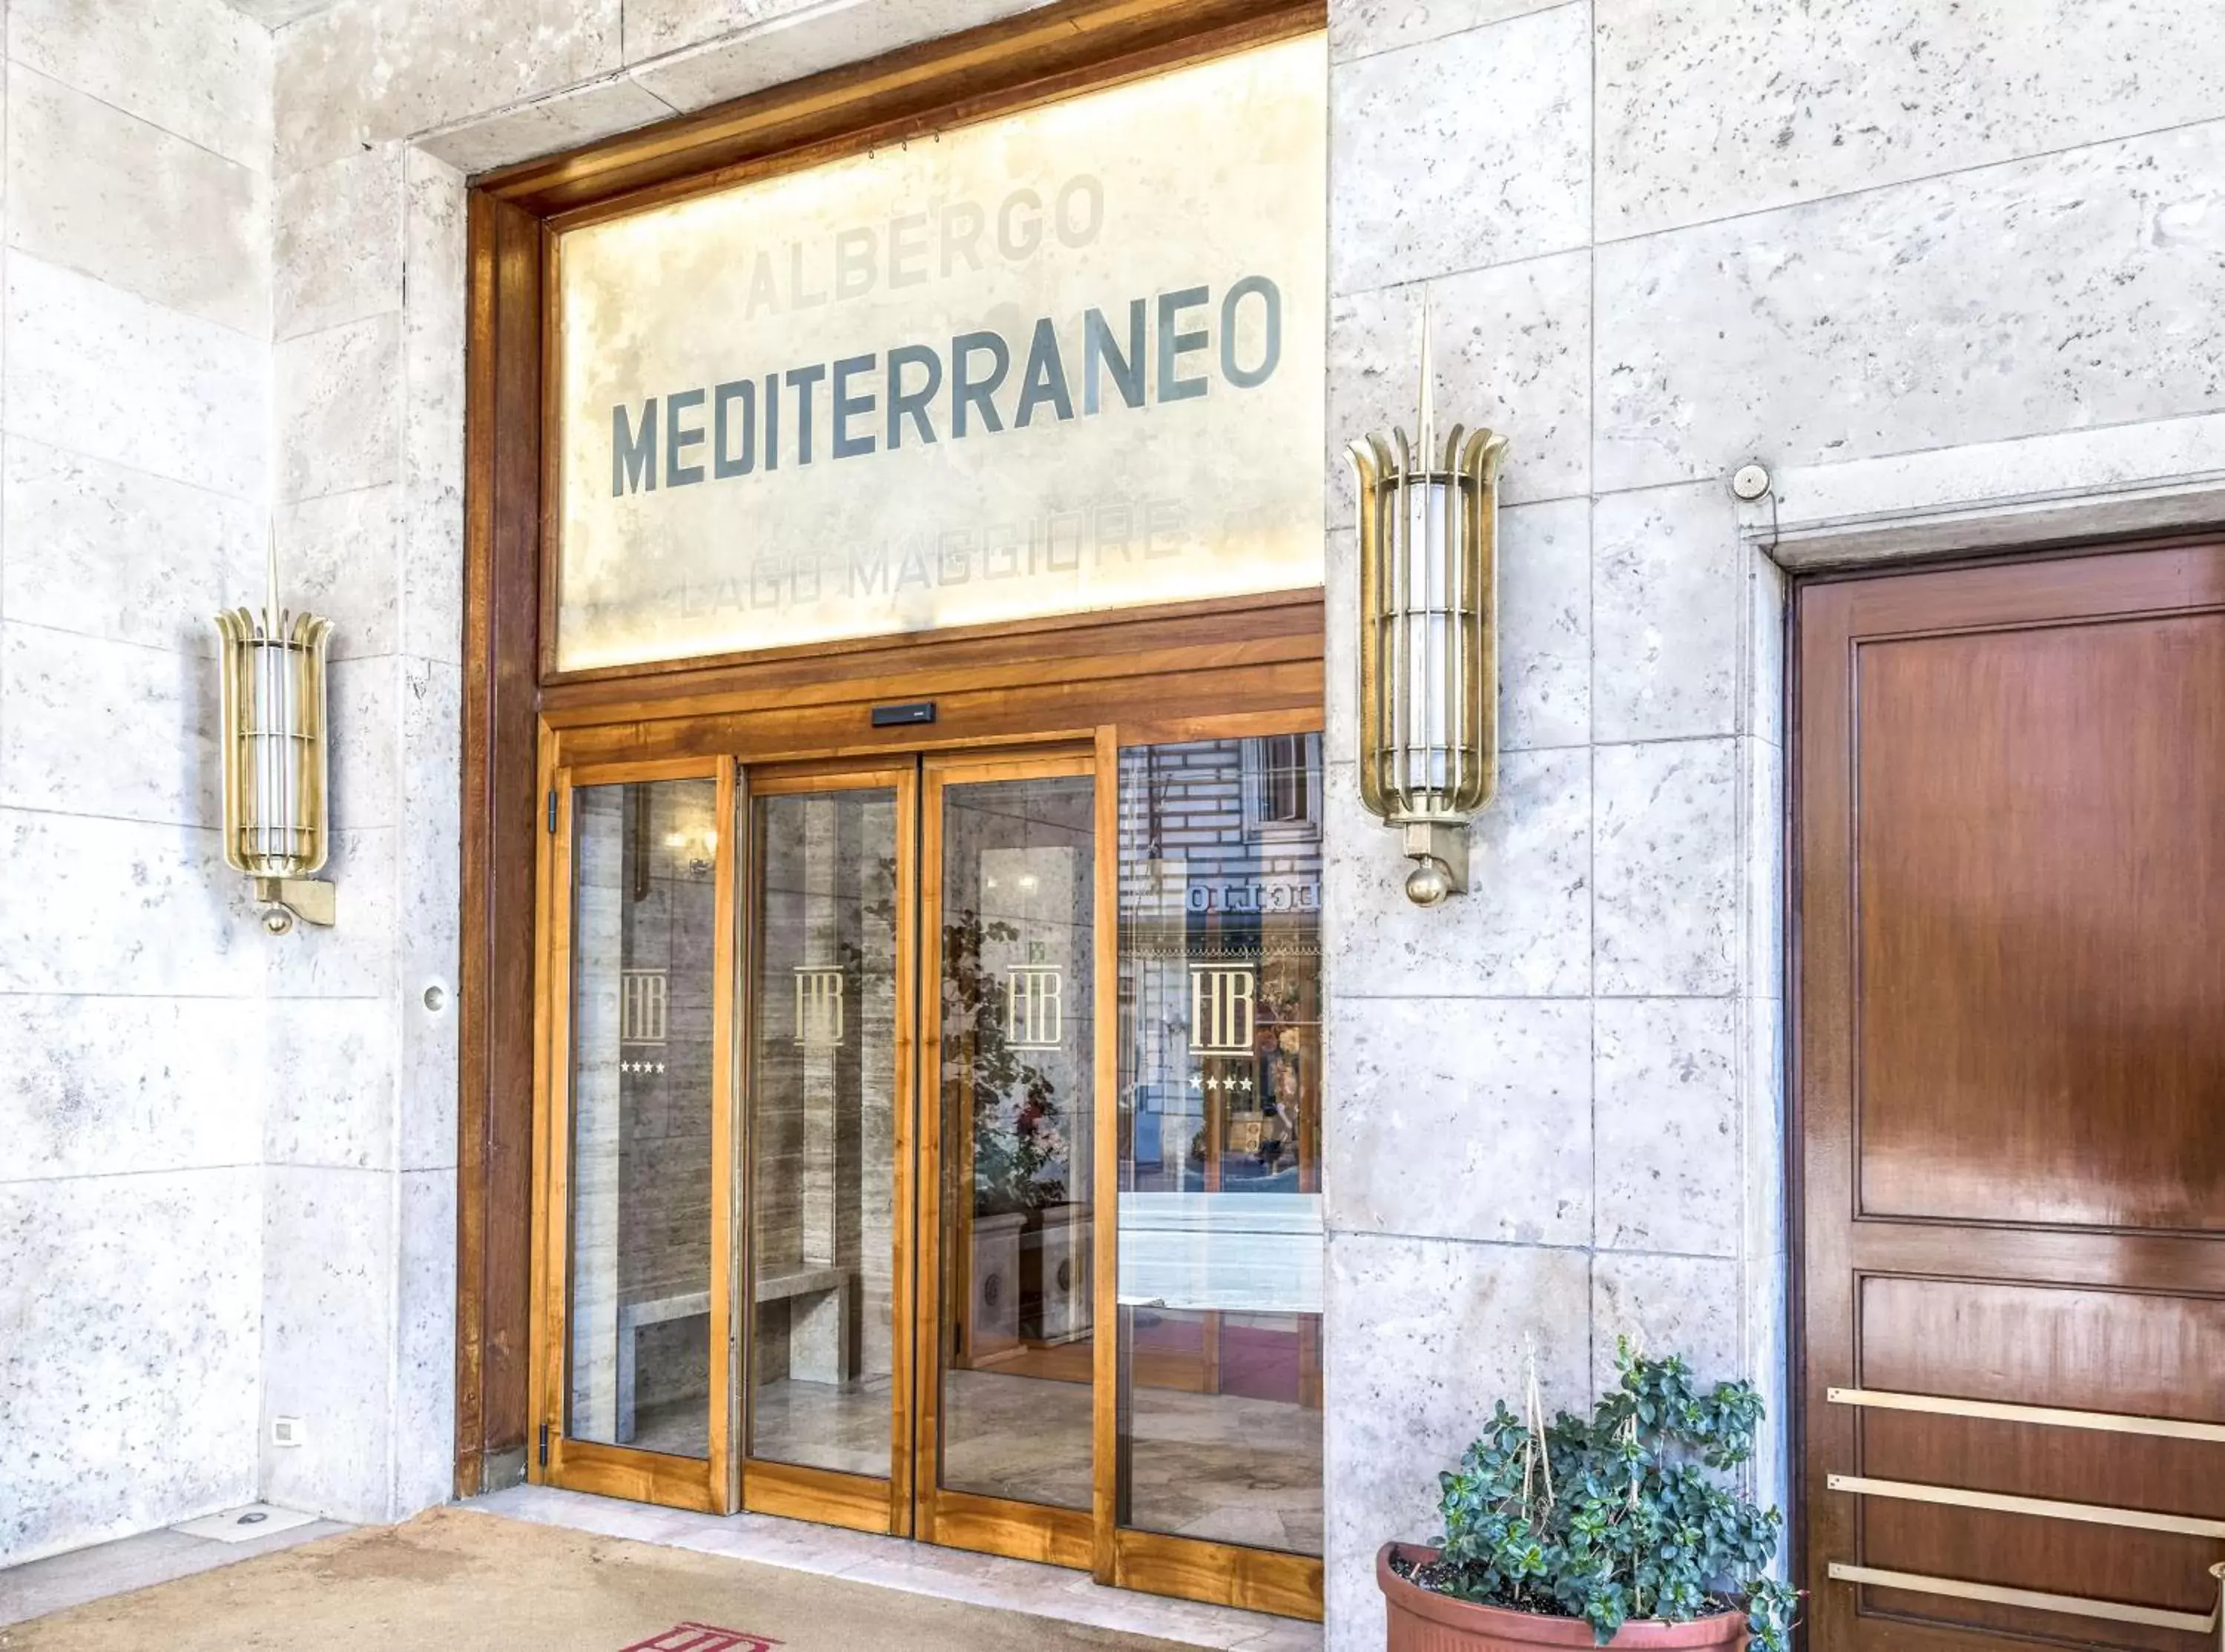 Facade/entrance in Bettoja Hotel Mediterraneo